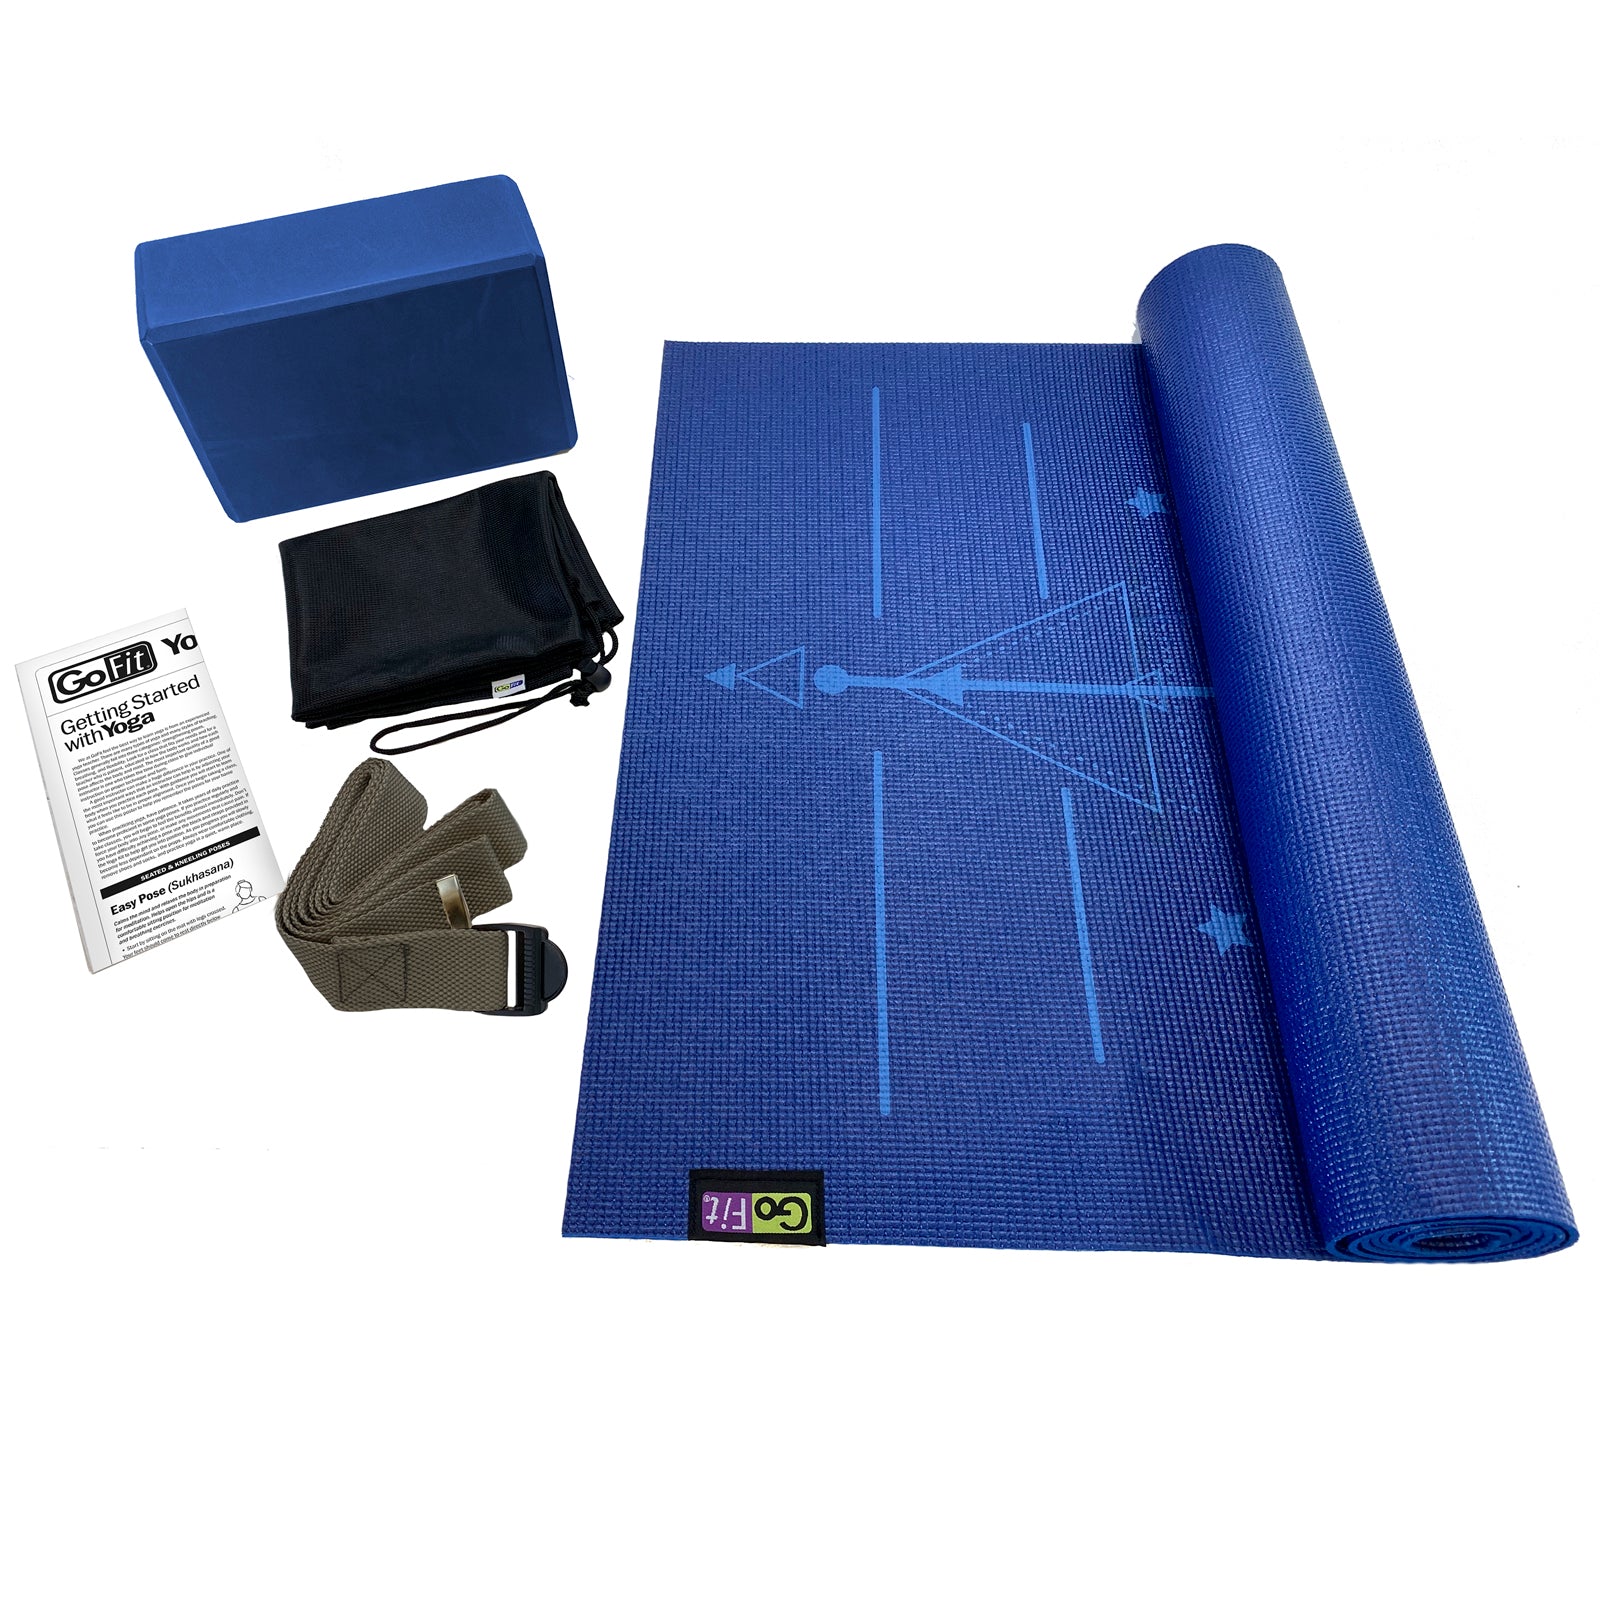 Yoga Starter Kit 15-Piece Yoga Equipment - Yoga Set